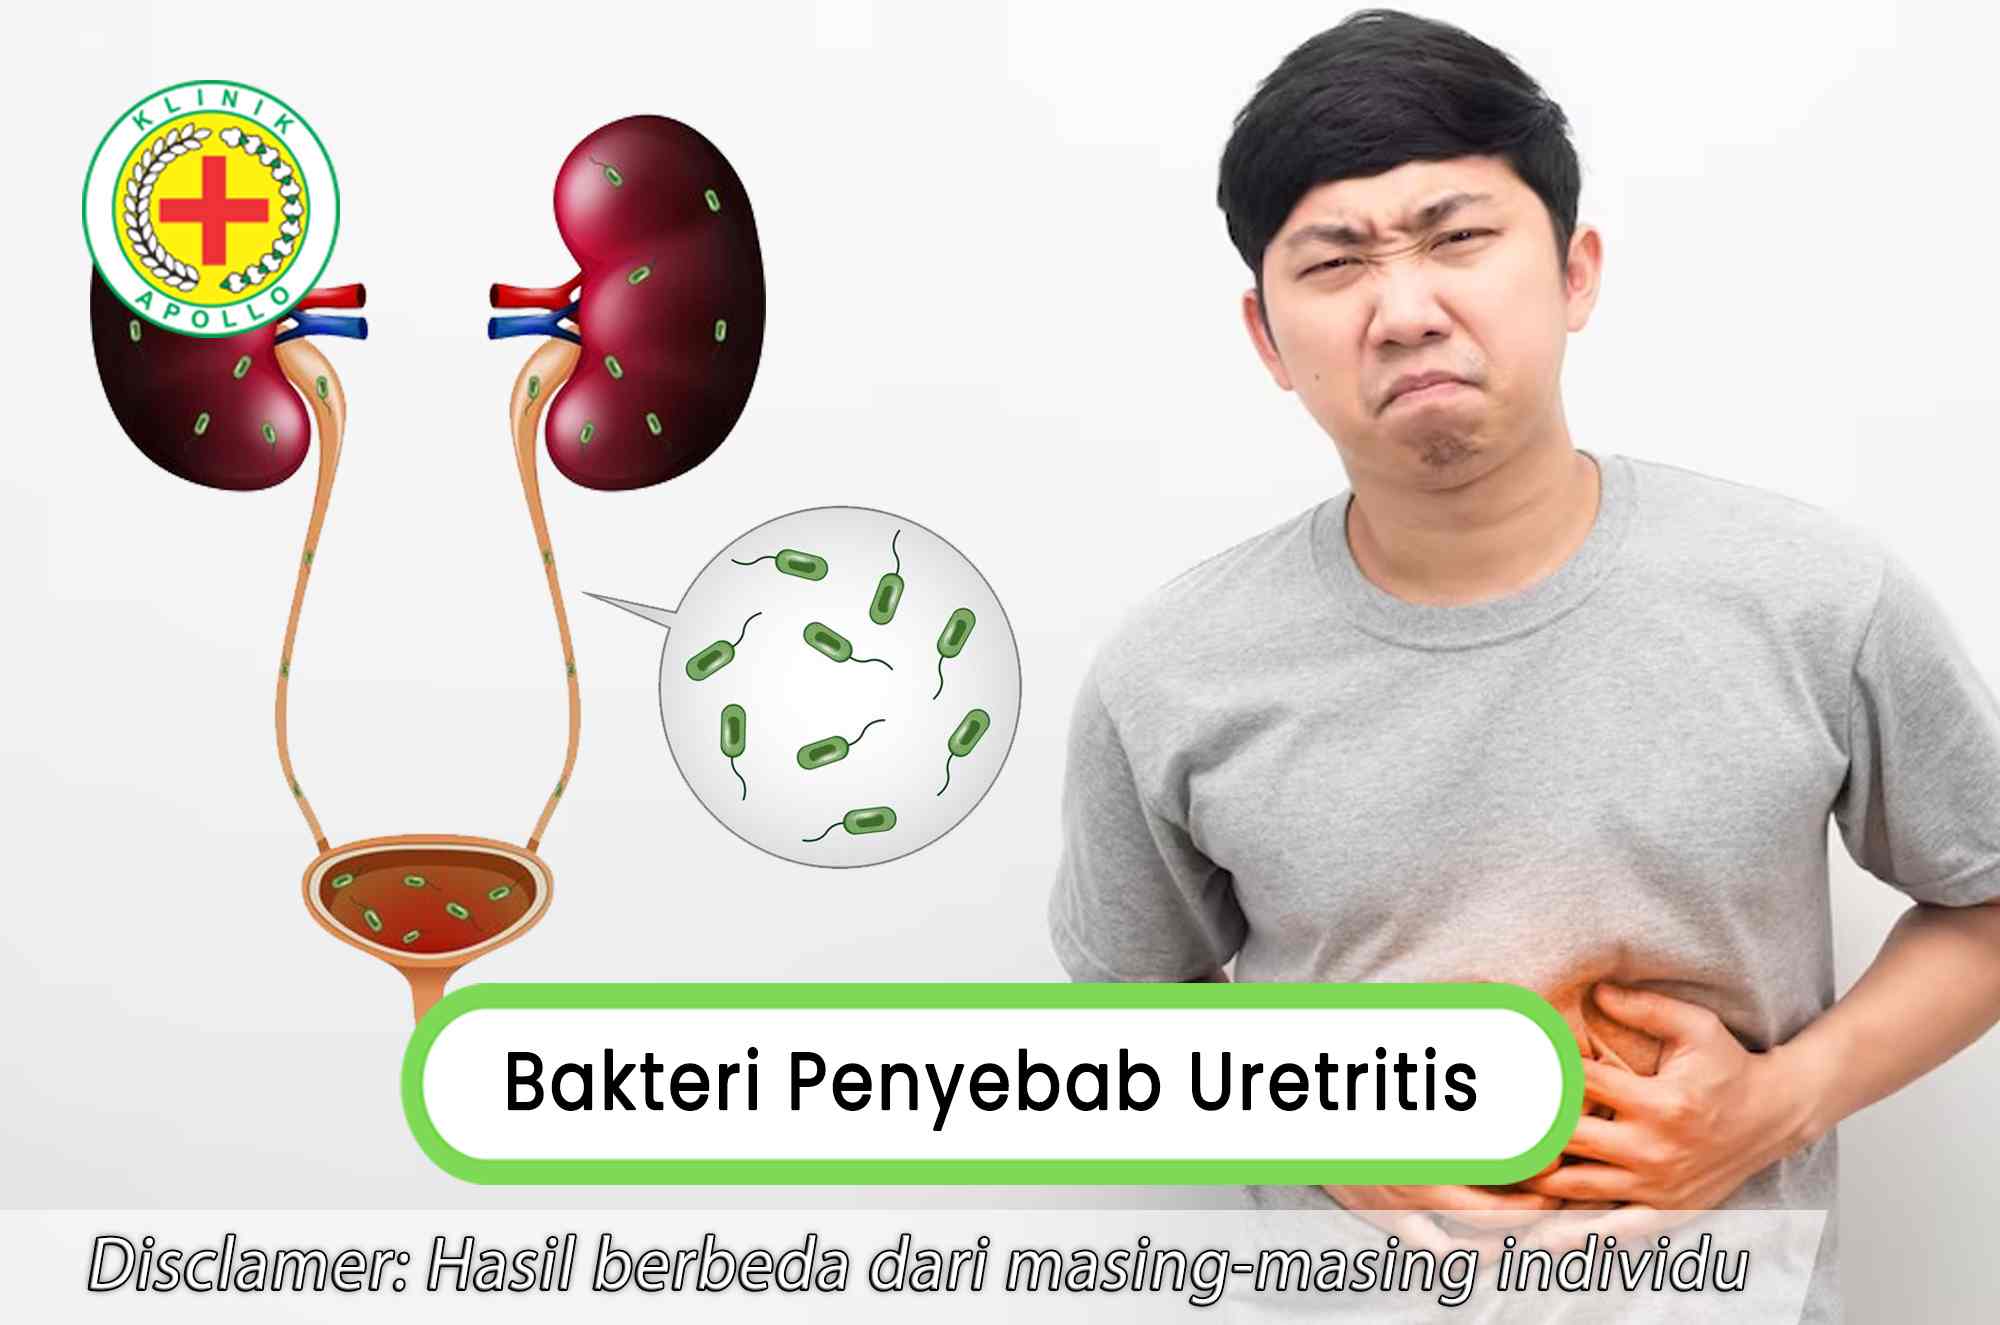 Mengenali bakteri penyebab uretritis adalah dengan cara melakukan pemeriksaan medis di Klinik Apollo Jakarta.